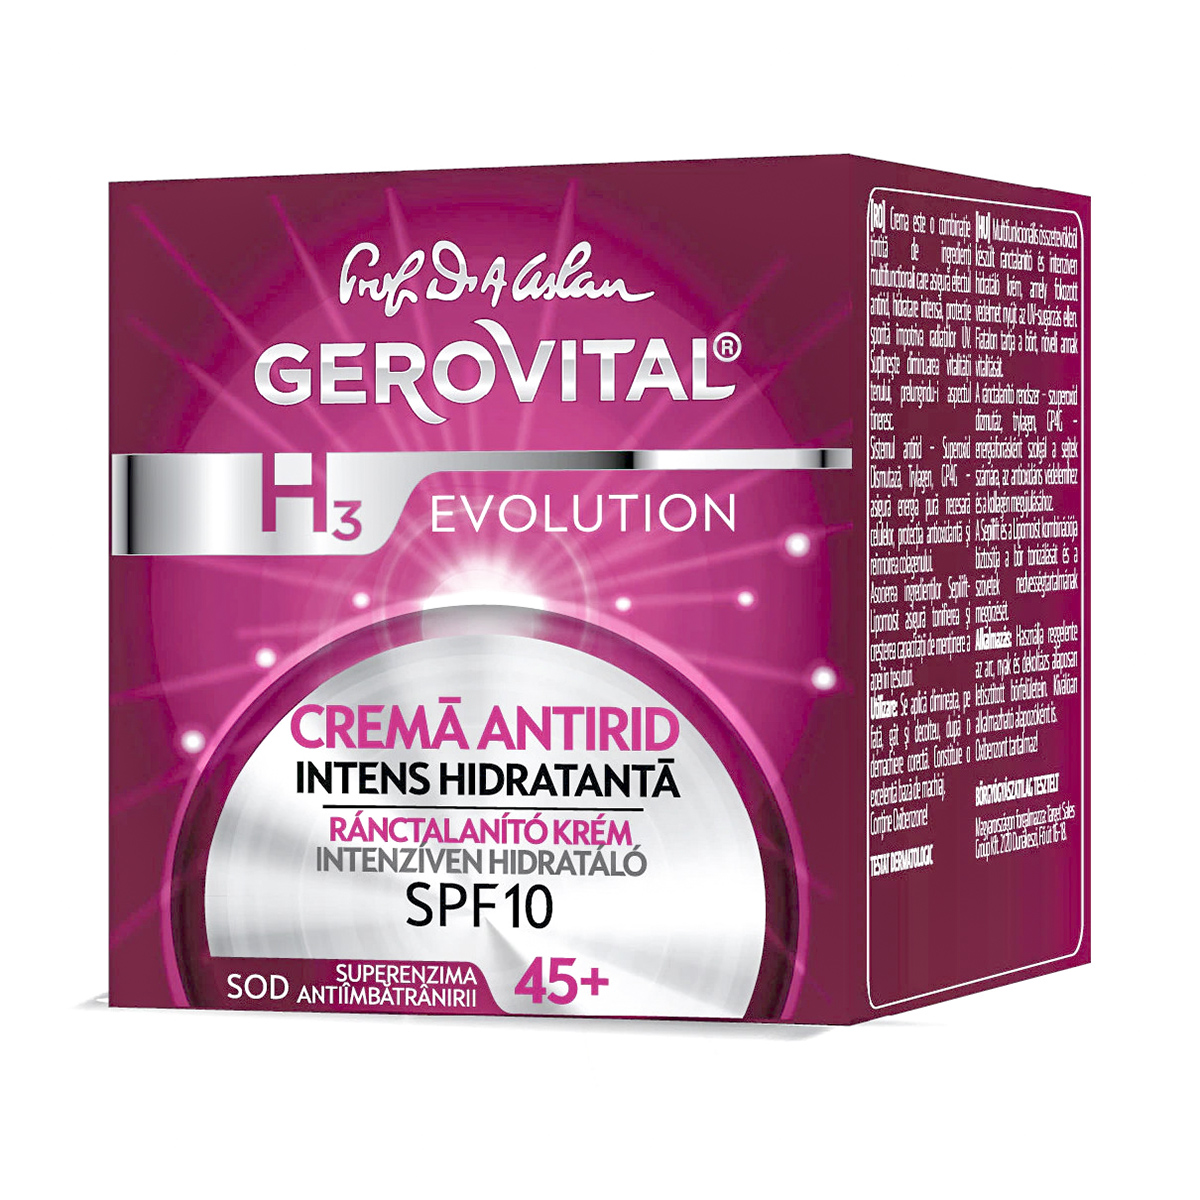 Crema Antirid Intens Hidratanta SPF 10 Gerovital H3 Evolution, 50 ml